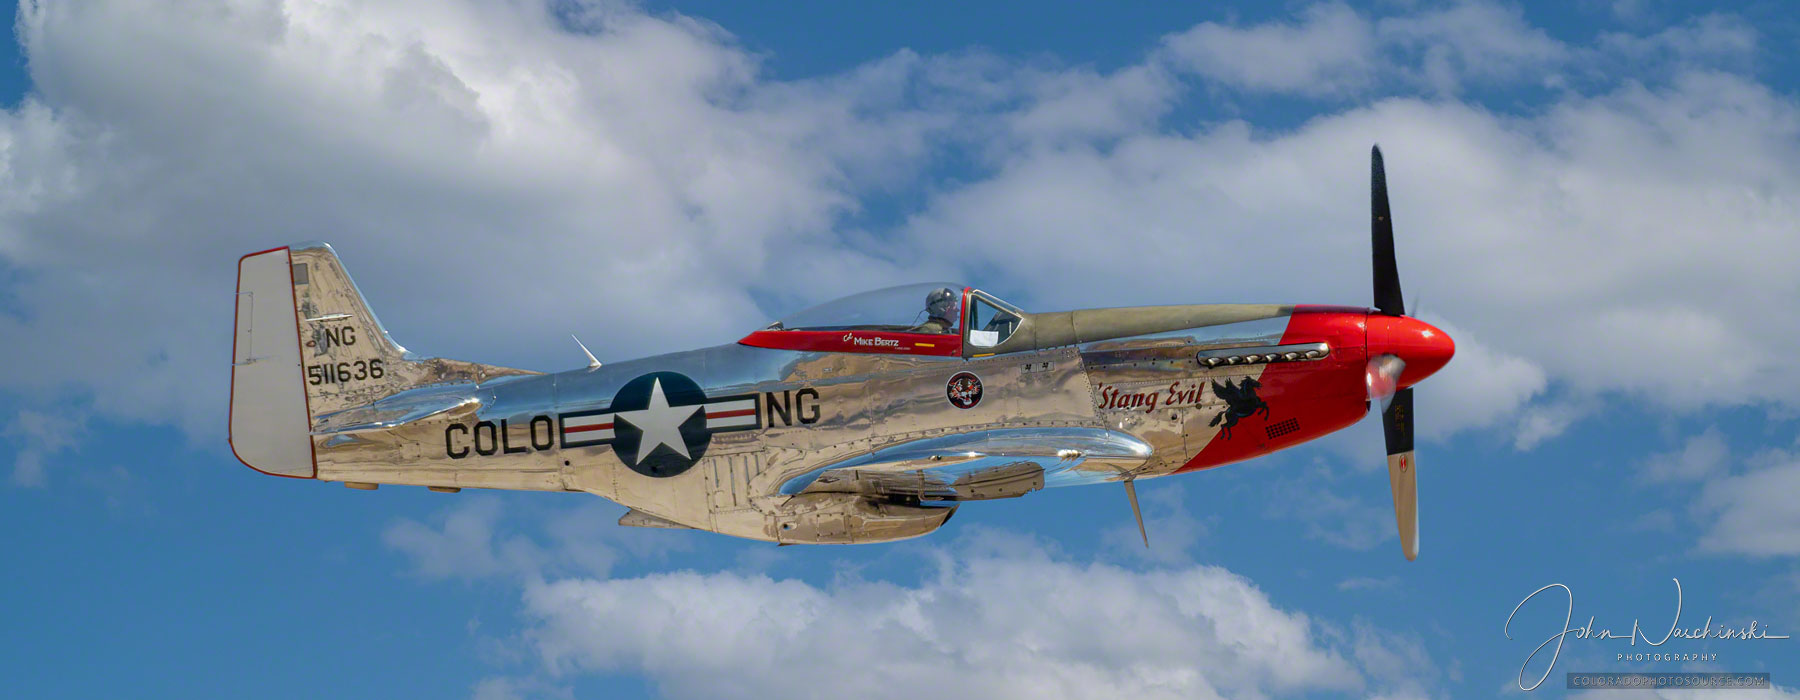 Photo of 1945 North American P-51D Mustang (N11636) - "Stang Evil"